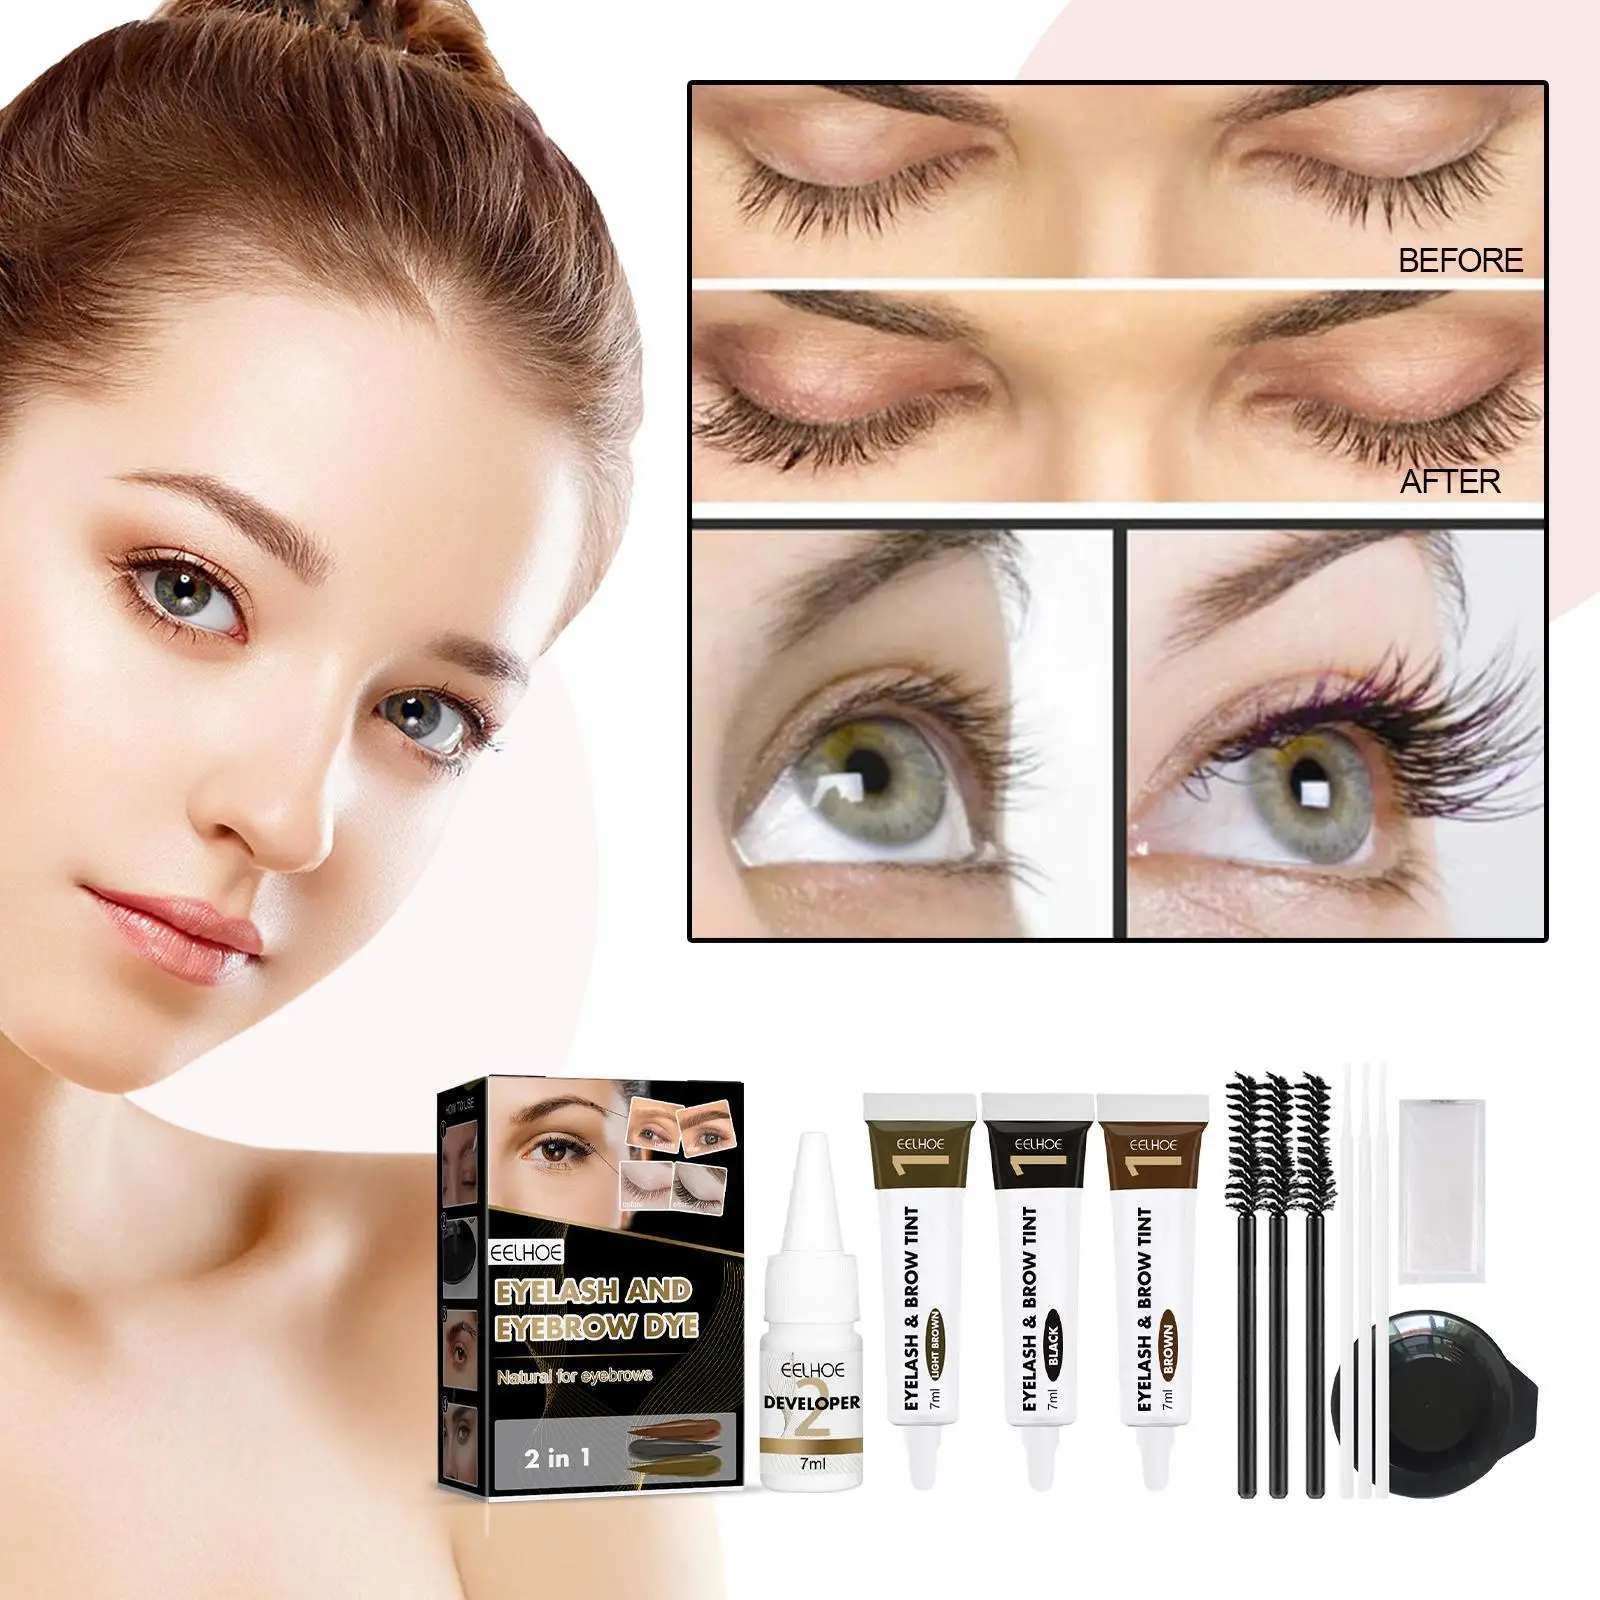 

New Eyelash Eyebrow Dye Tint Kit Professional Lash Lifting Eyebrow Dyeing Mascara Make Up Setting Brow Charming Eye Makeup Set